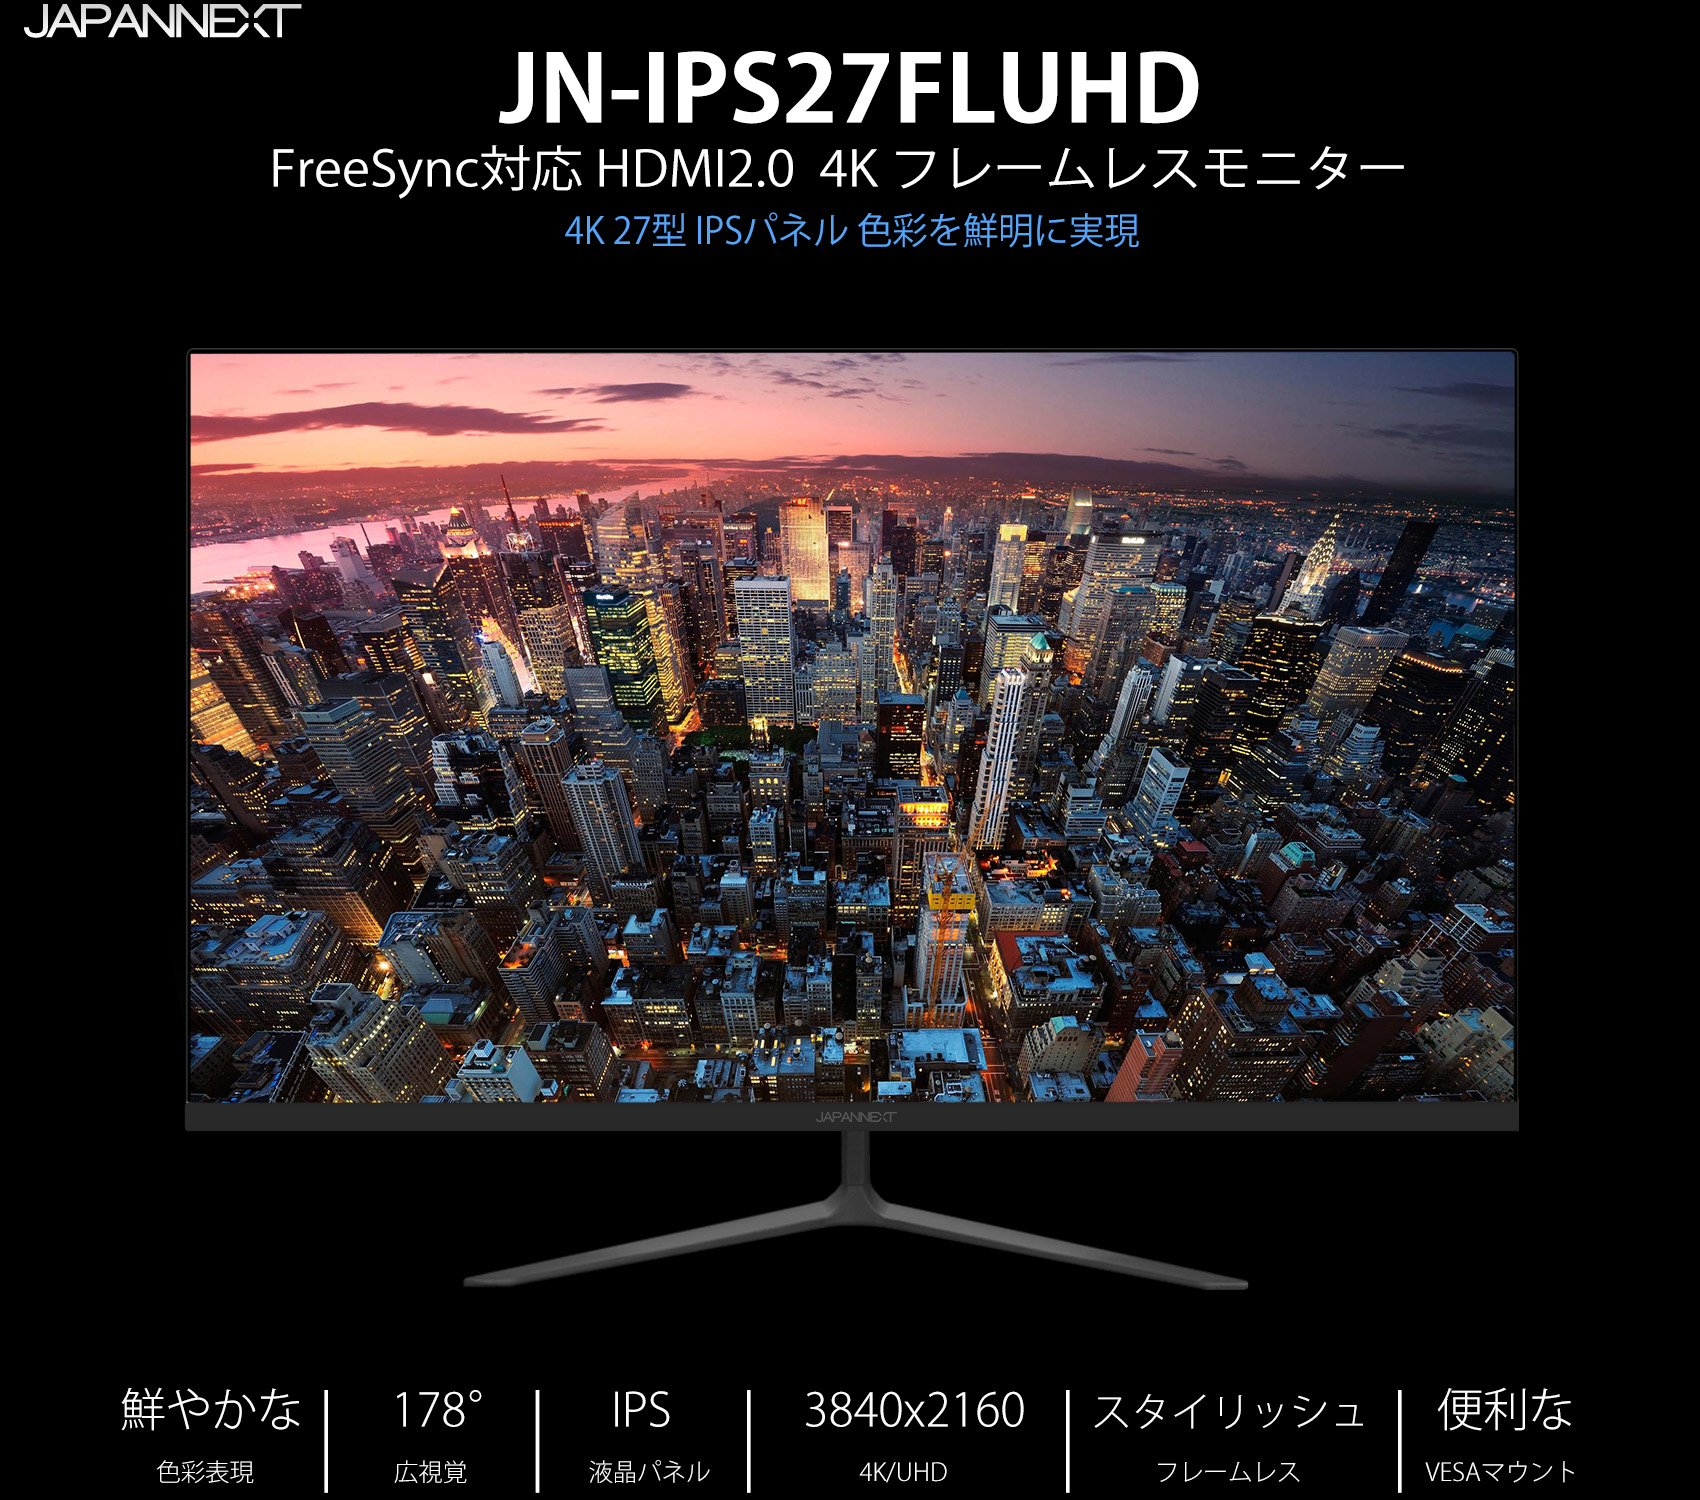 JAPANNEXT JN-IPS27FLUHD 4K 27インチIPS液晶ディスプレイ 極薄ケース 狭額フレームレス スタイリッシュ AMD